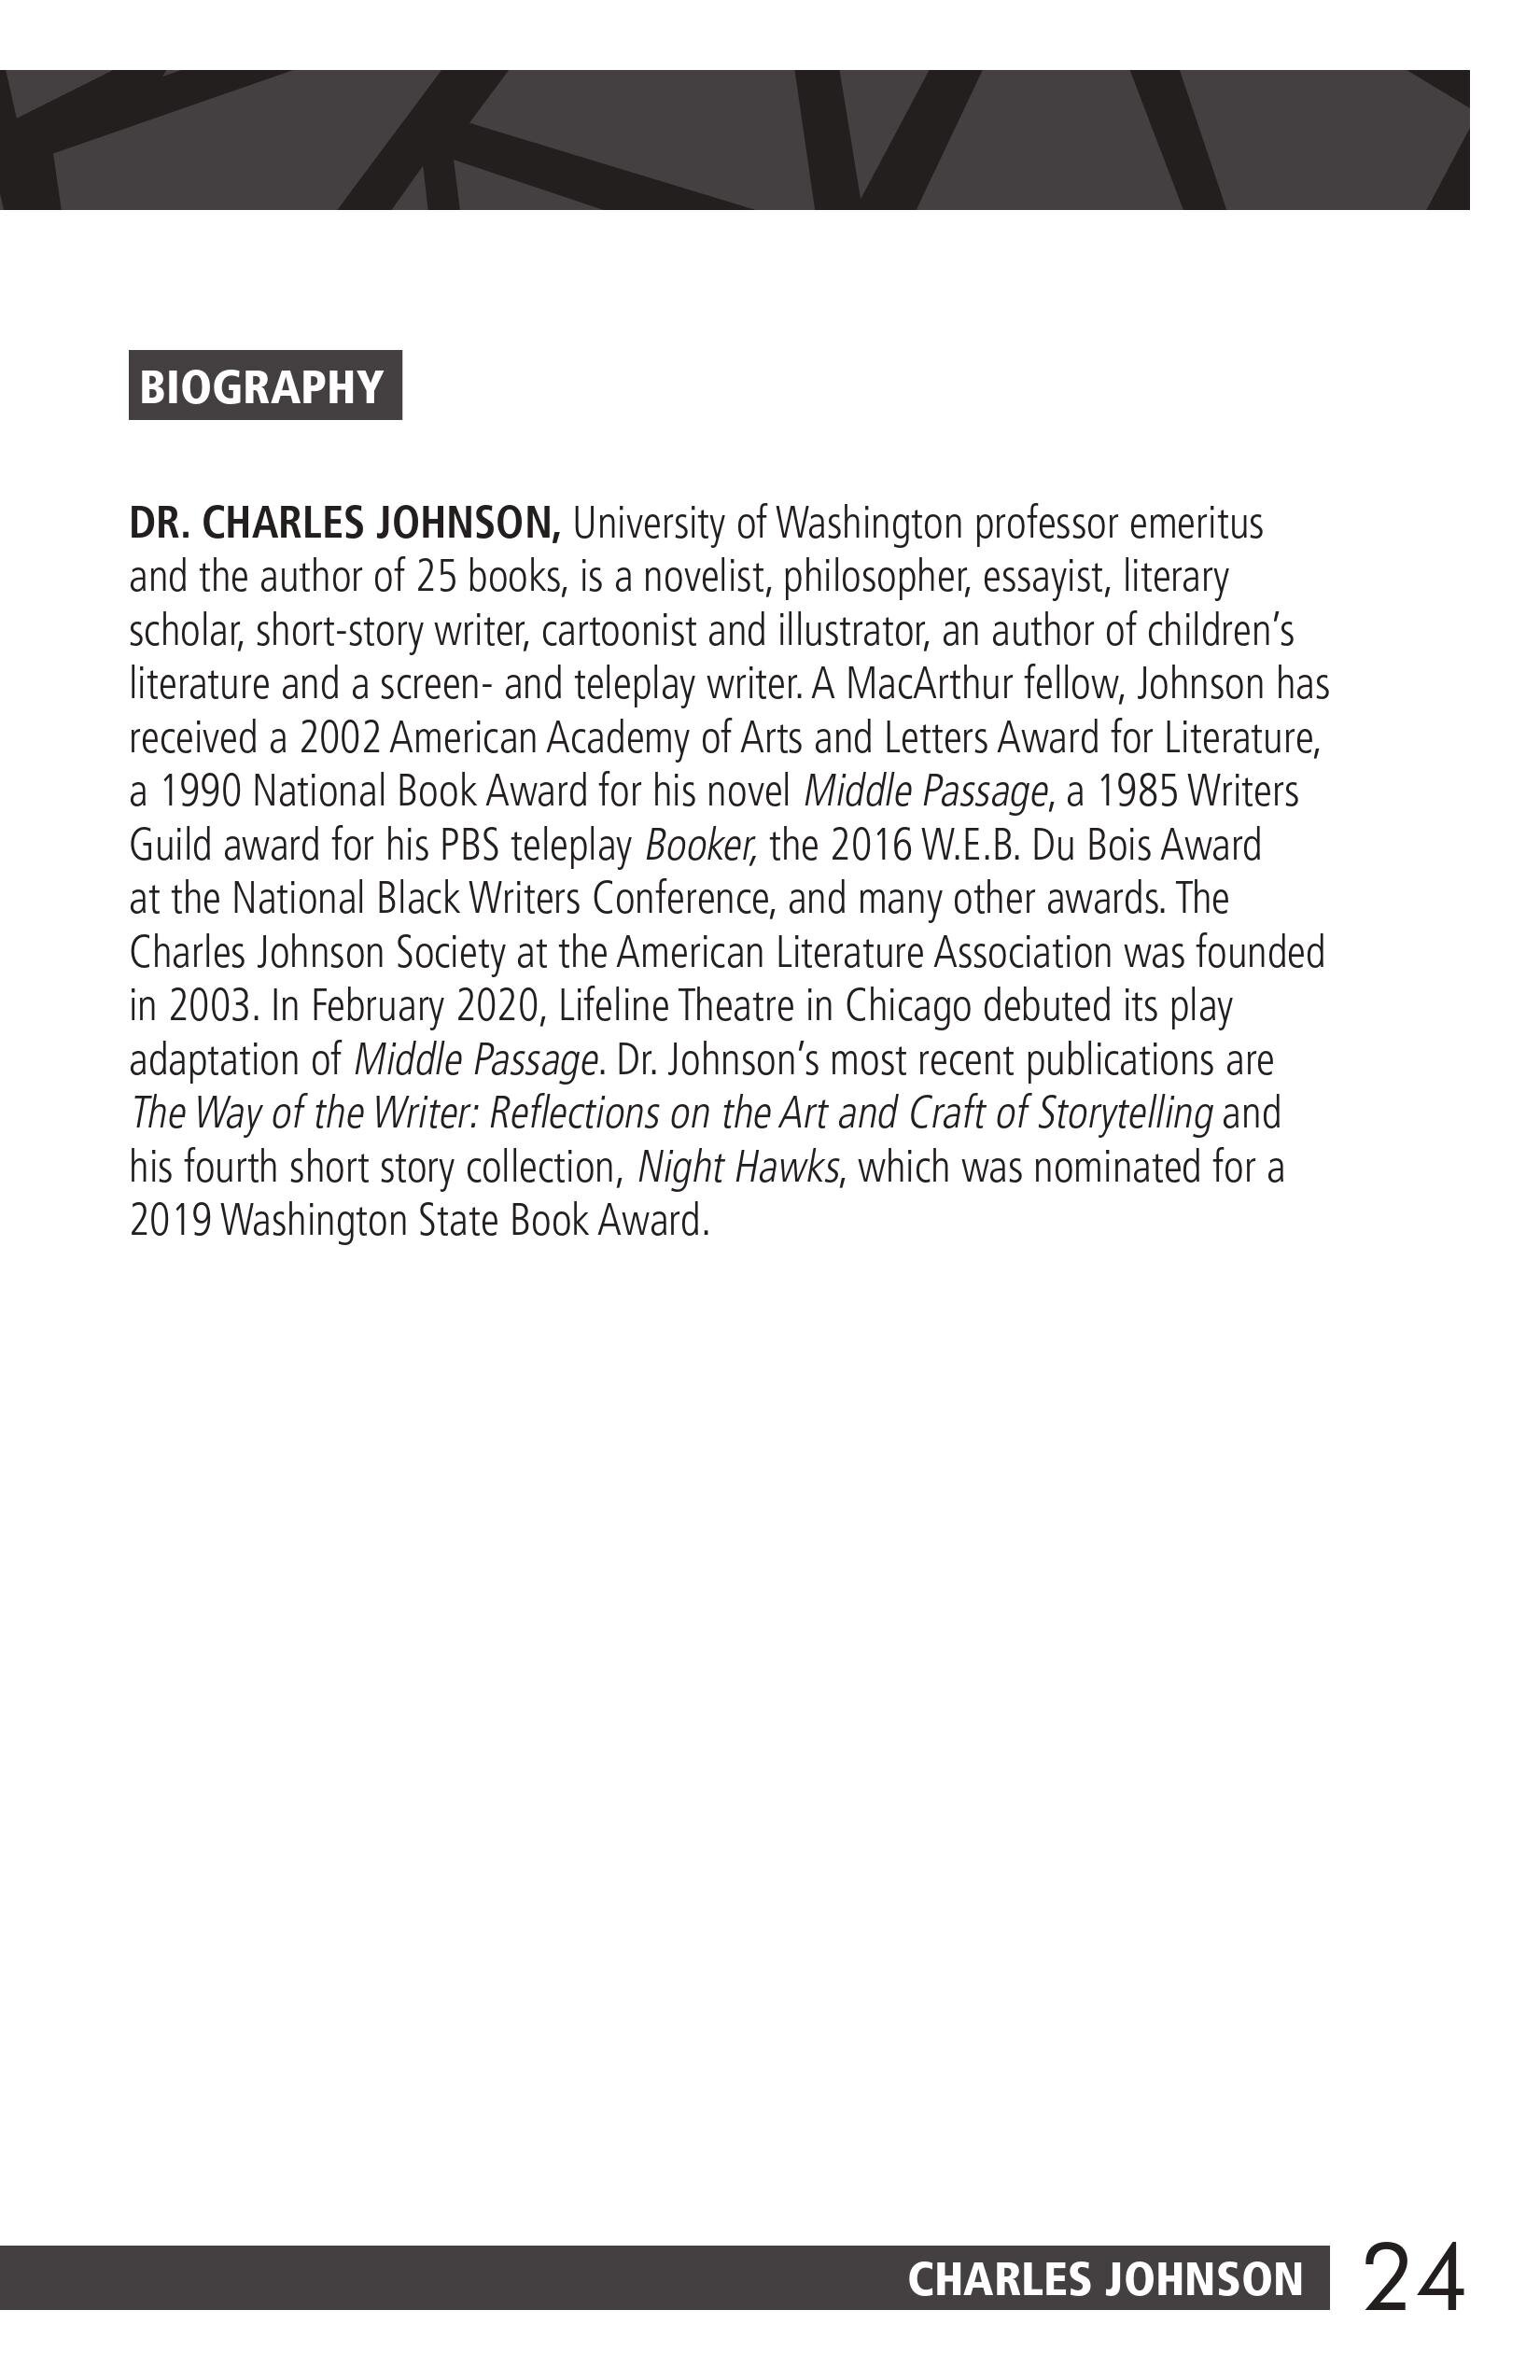 Charles Johnson Bio Page 24.jpg